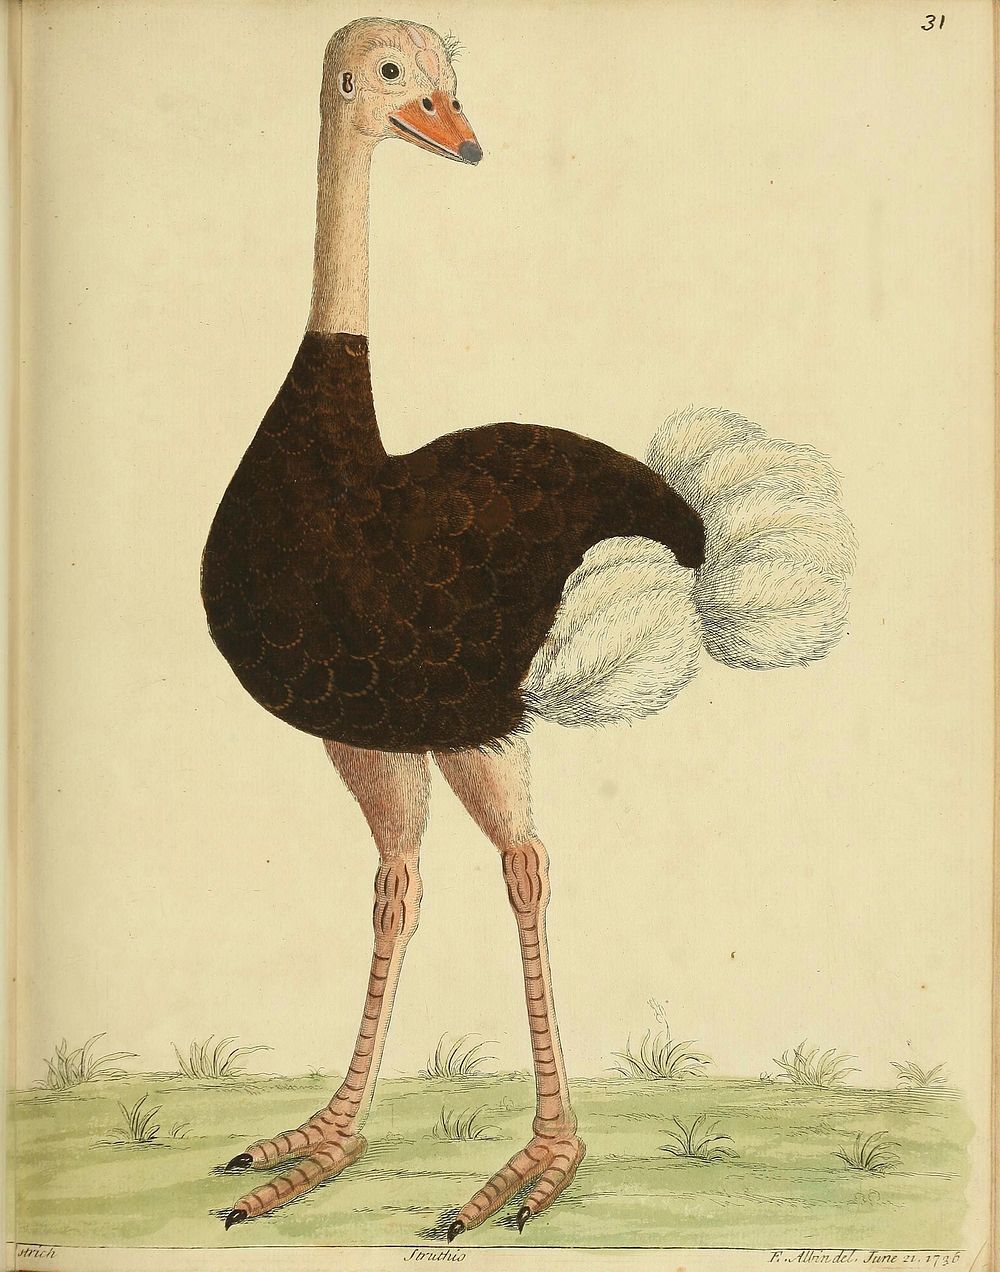 Original public domain image from Biodiversity Heritage Library.